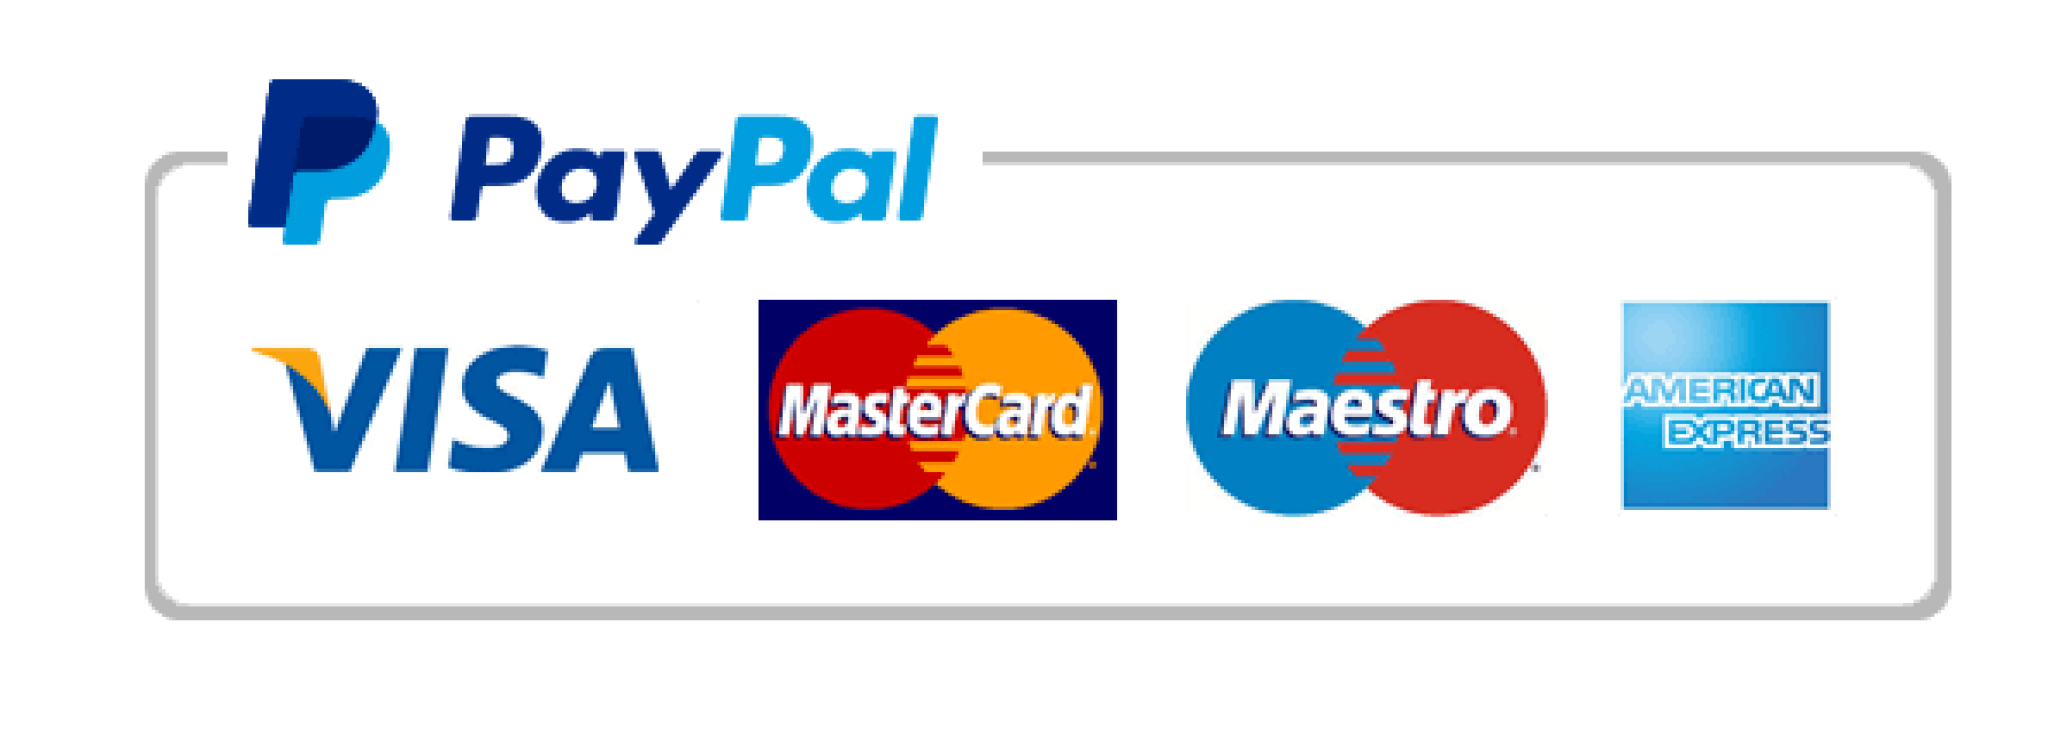 Купить карту пэй. PAYPAL логотип. PAYPAL иконка. Платежная система PAYPAL. Карта visa MASTERCARD Maestro.